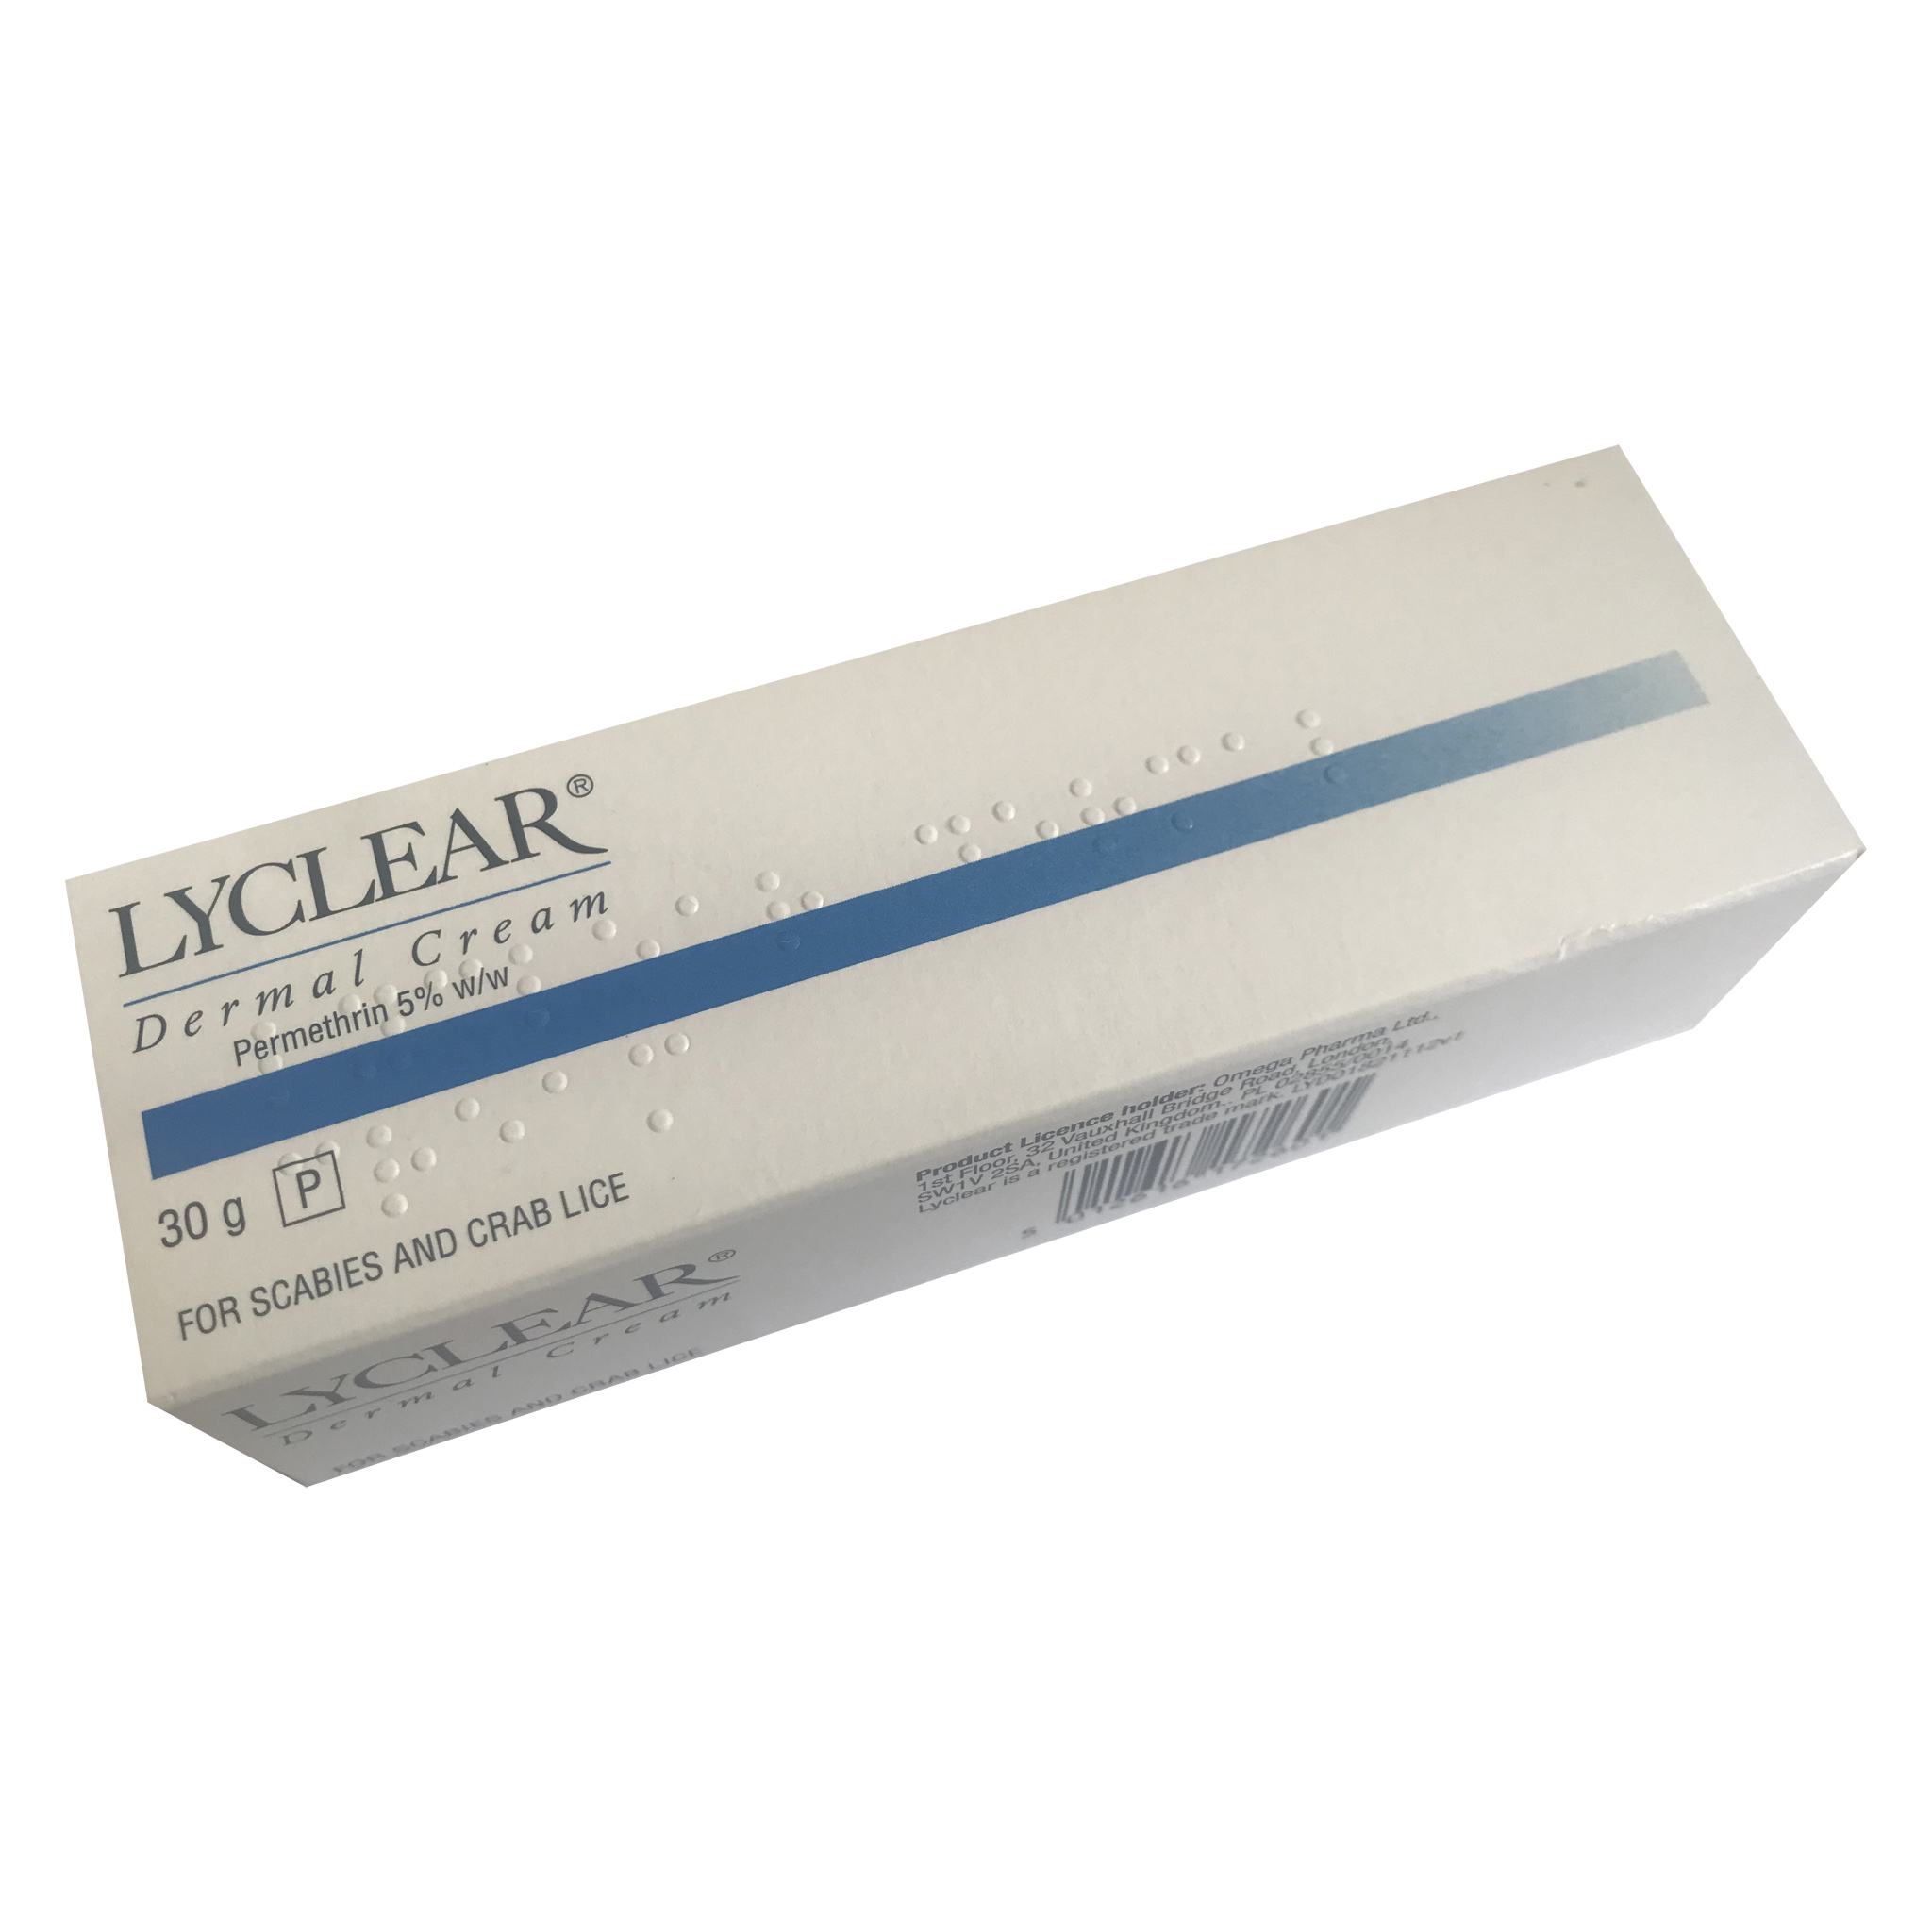 Lyclear Dermal Cream (30g) - 4 Packs